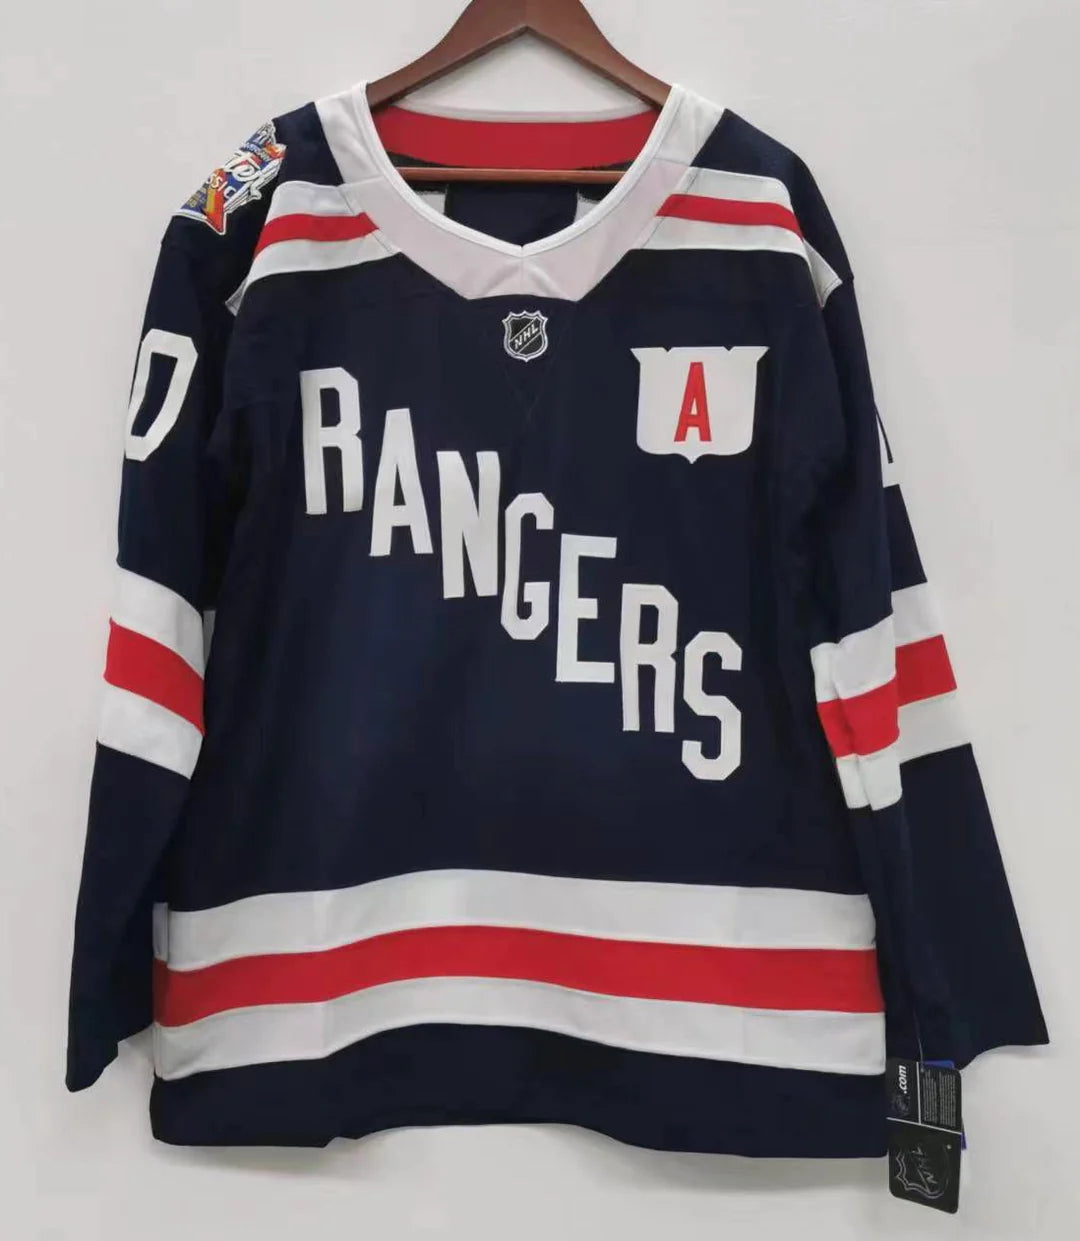 Artemi Panarin New York Rangers 2018 NHL Winter Classic Adidas Premier Player Jersey